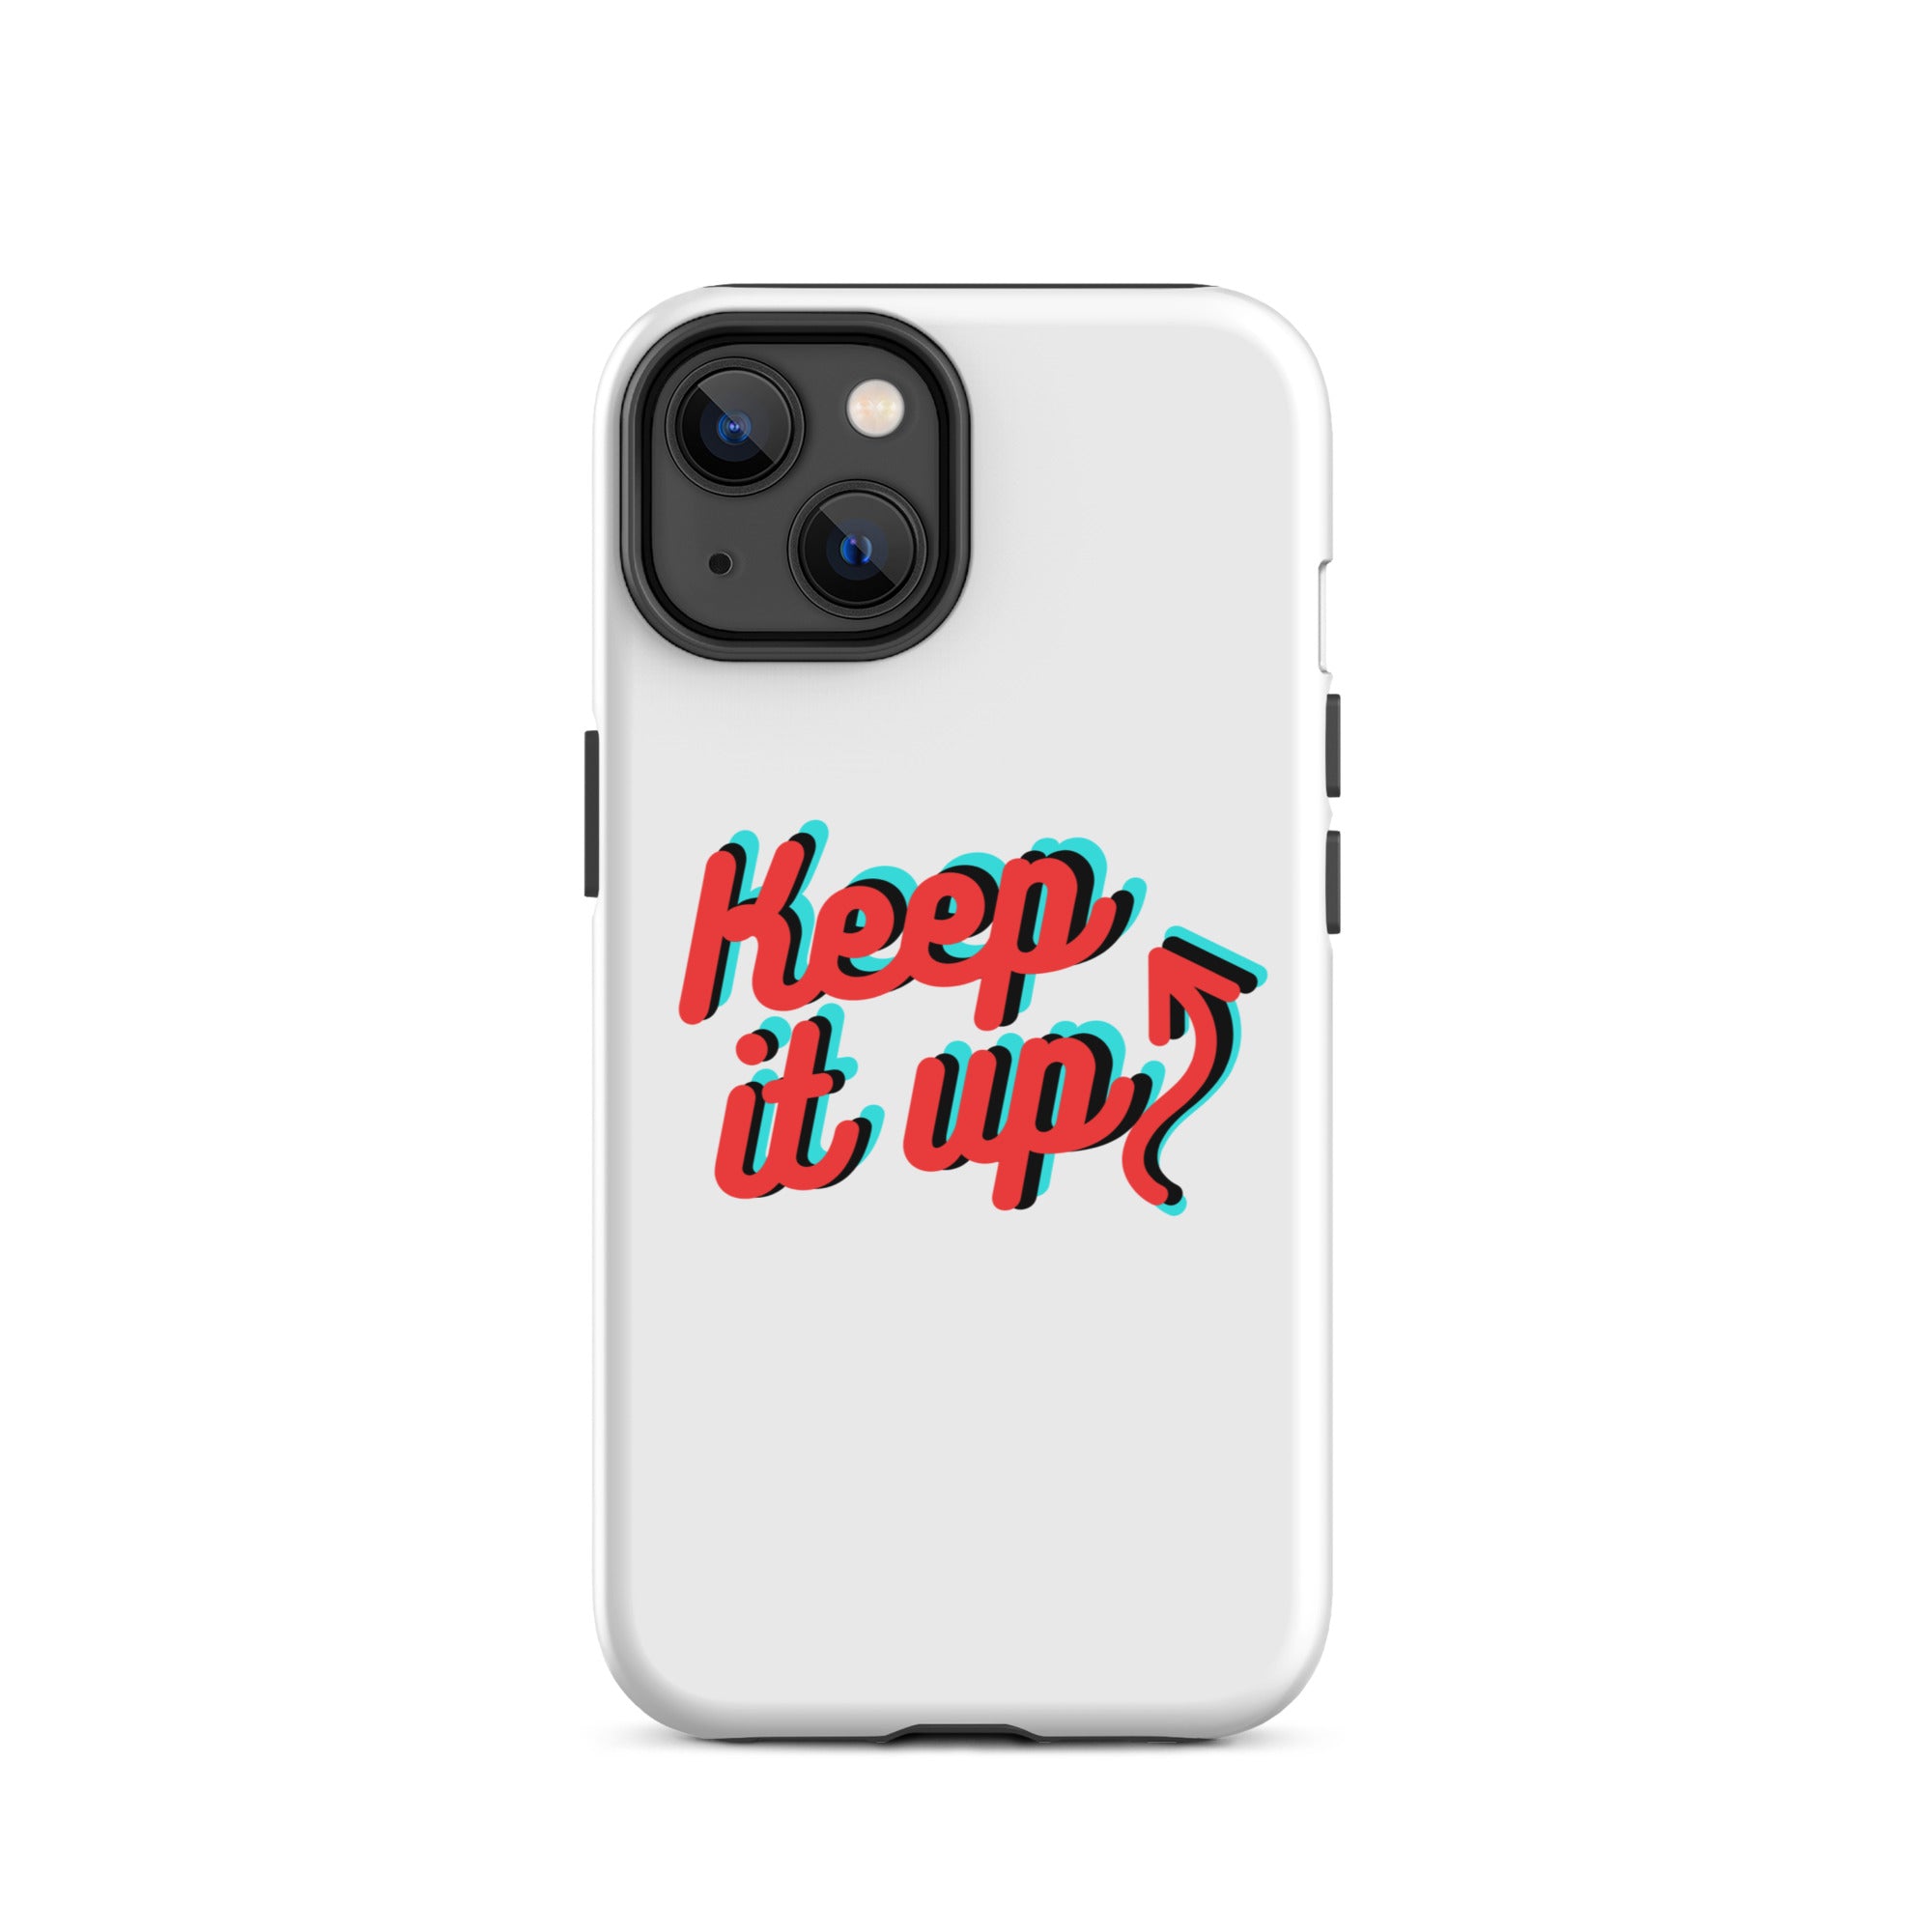 Keep It Up - Tough iPhone case